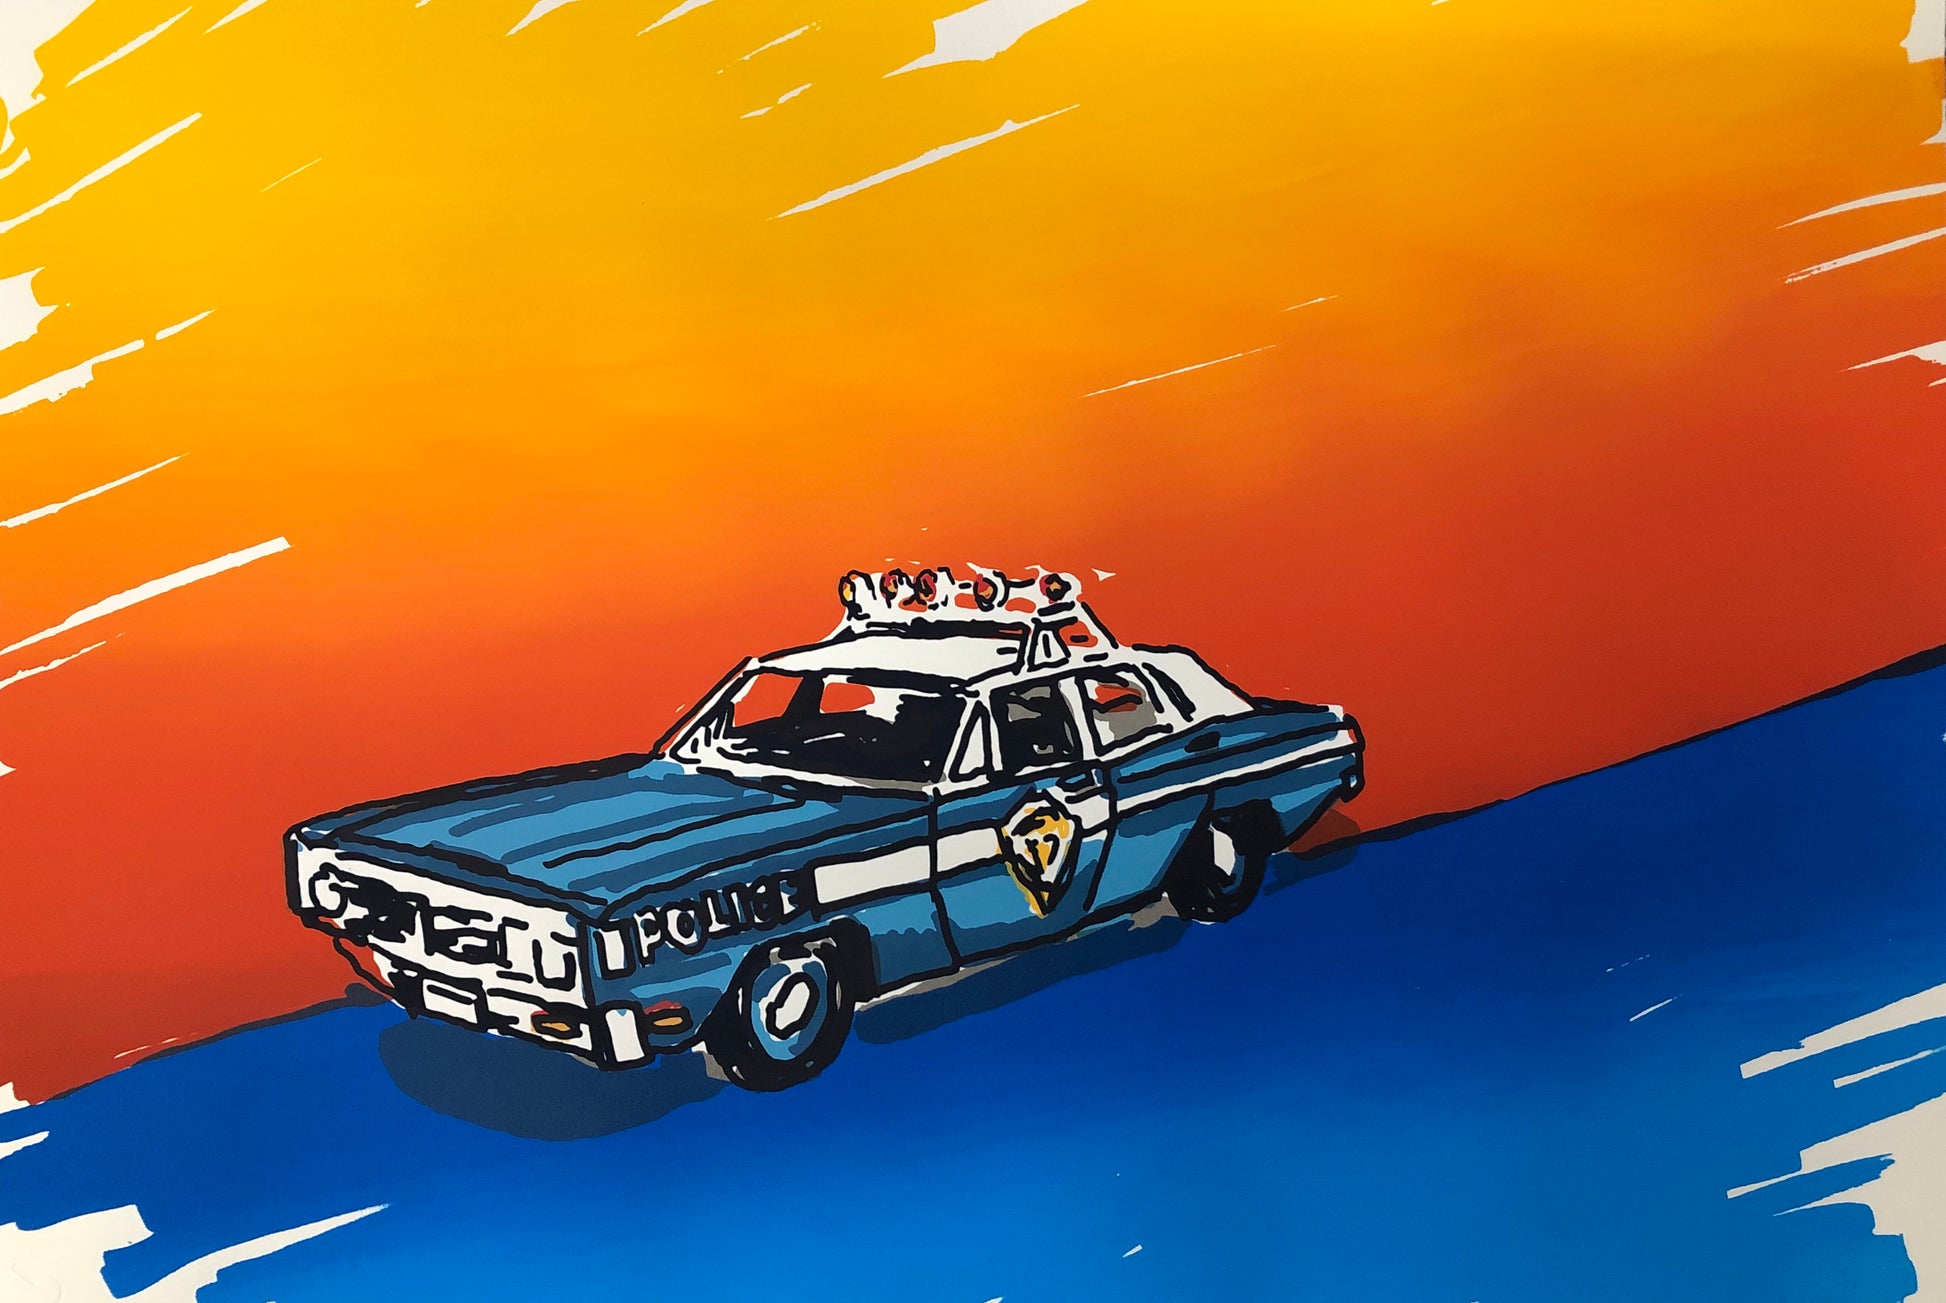 Police Car by M. Schorr - Mourlot Editions - Fine_Art - Poster - Lithograph - Wall Art - Vintage - Prints - Original